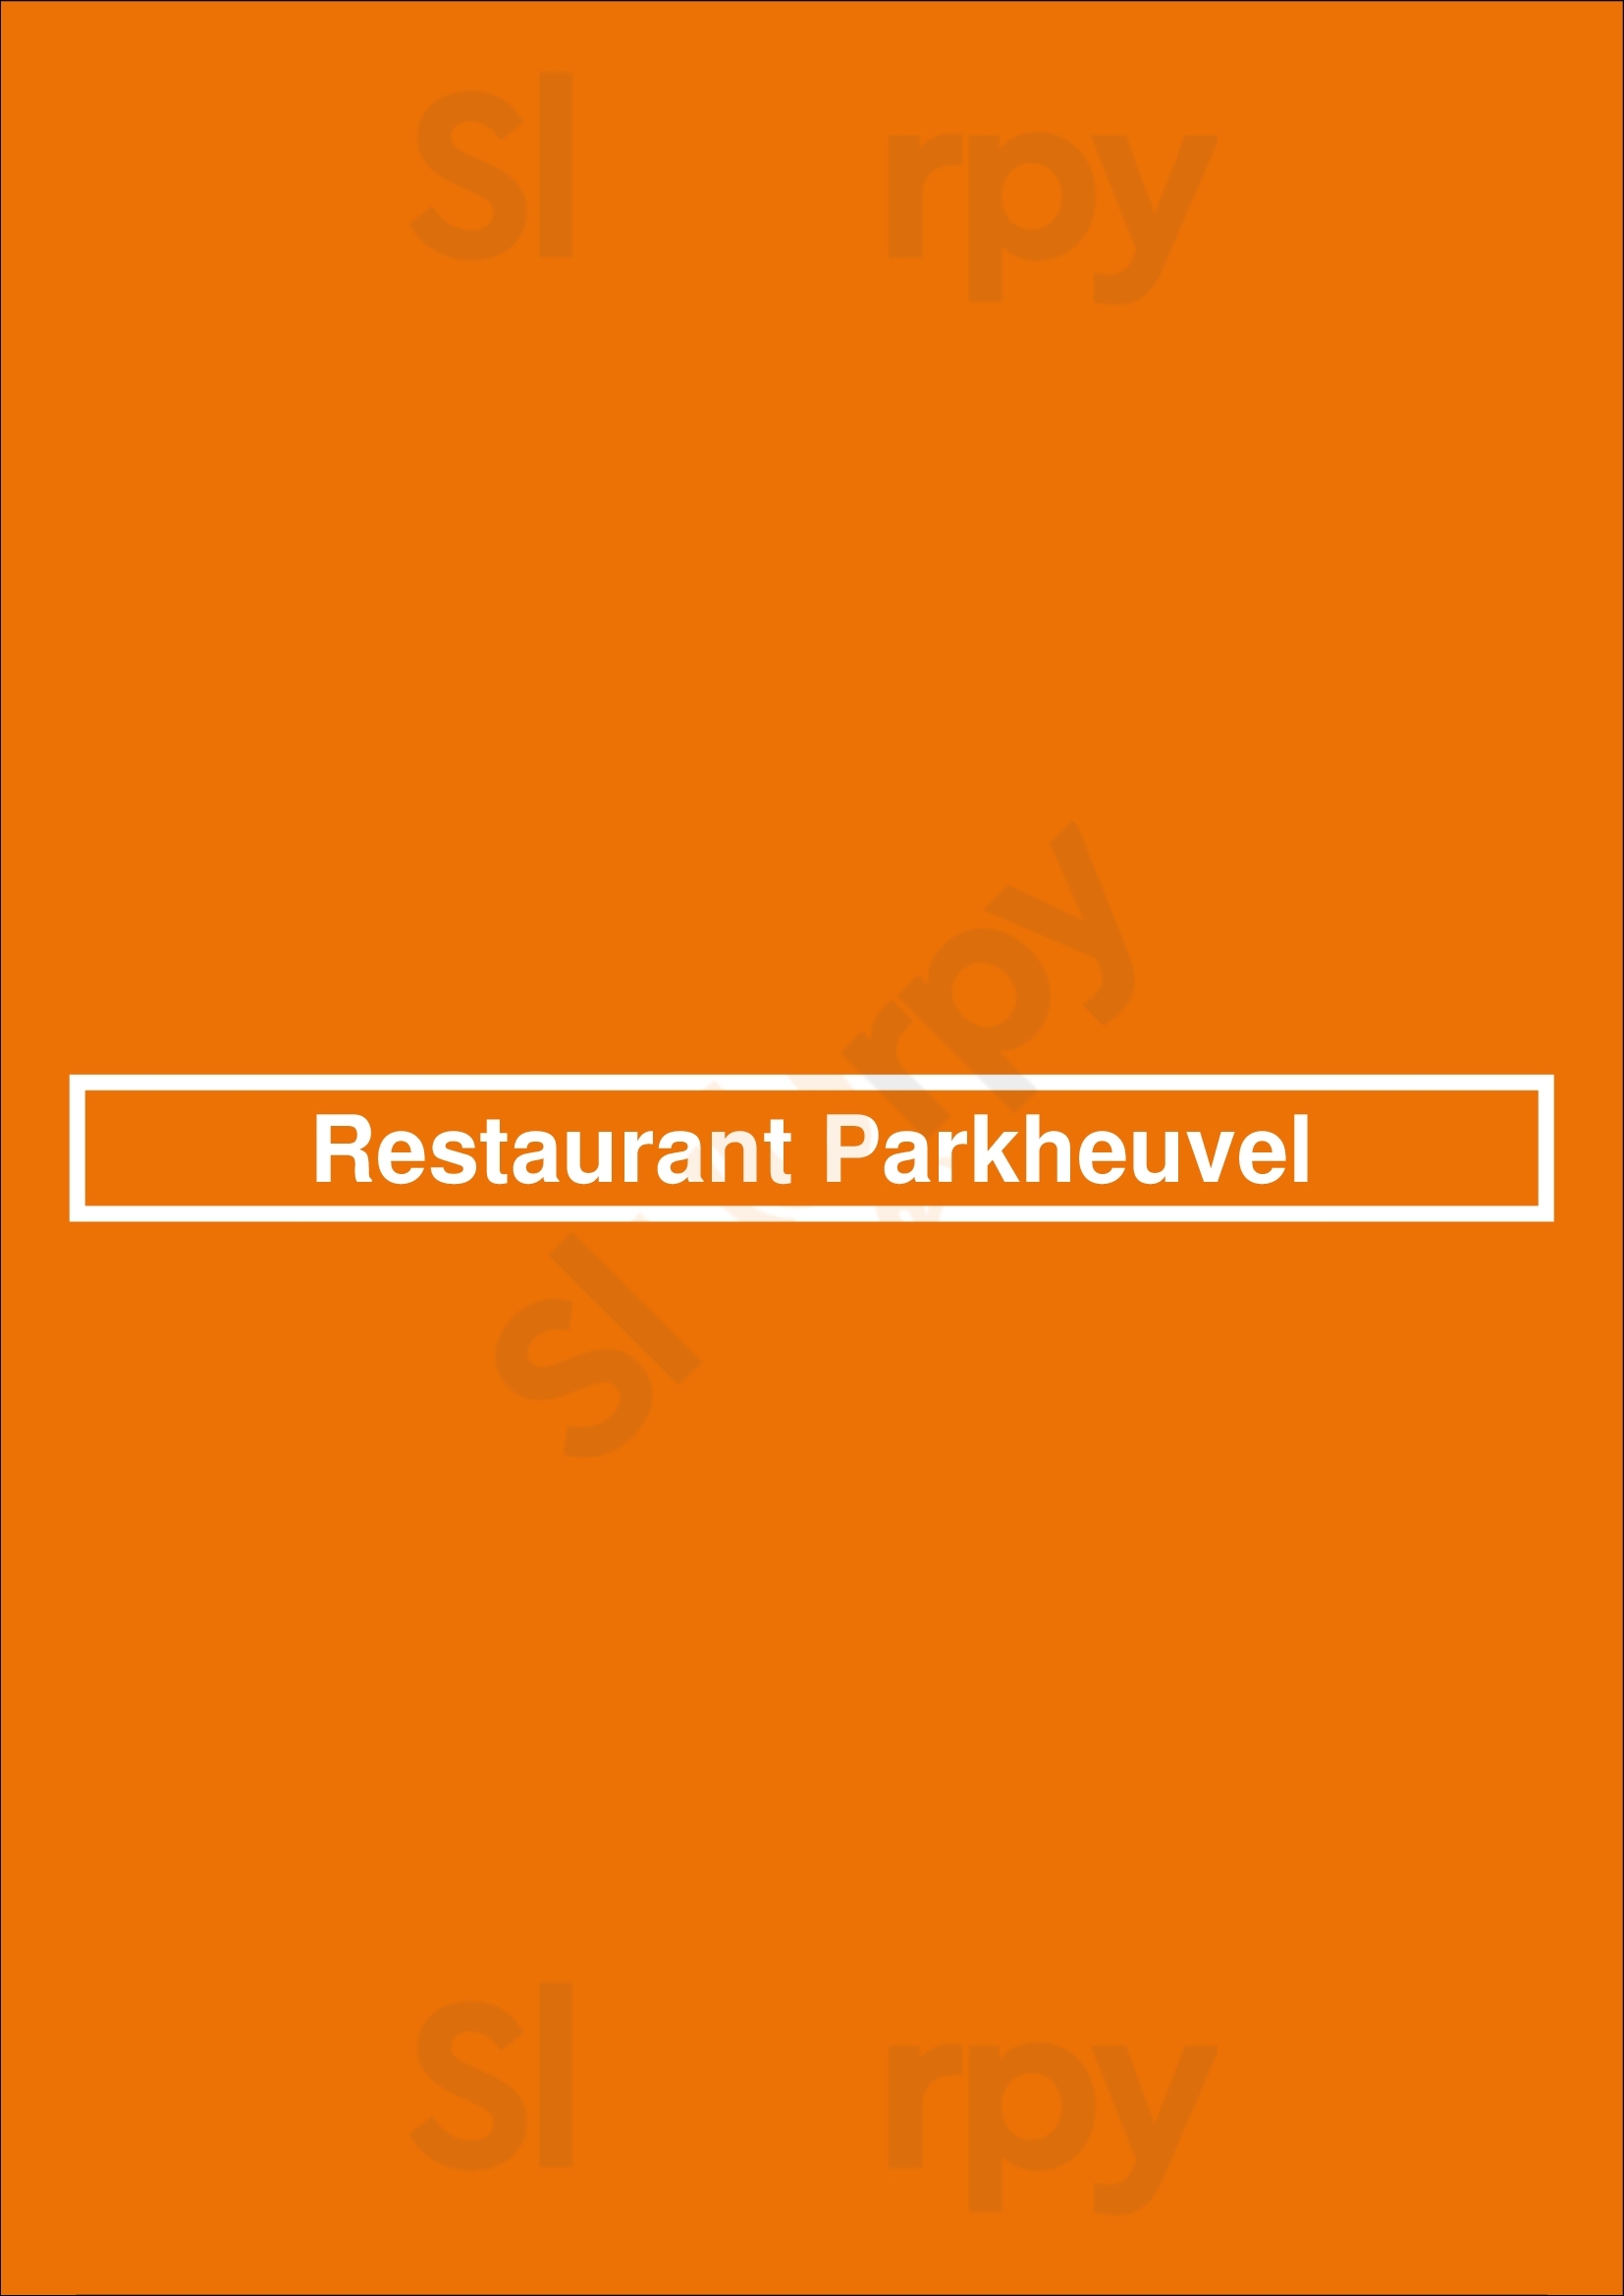 Restaurant Parkheuvel Rotterdam Menu - 1